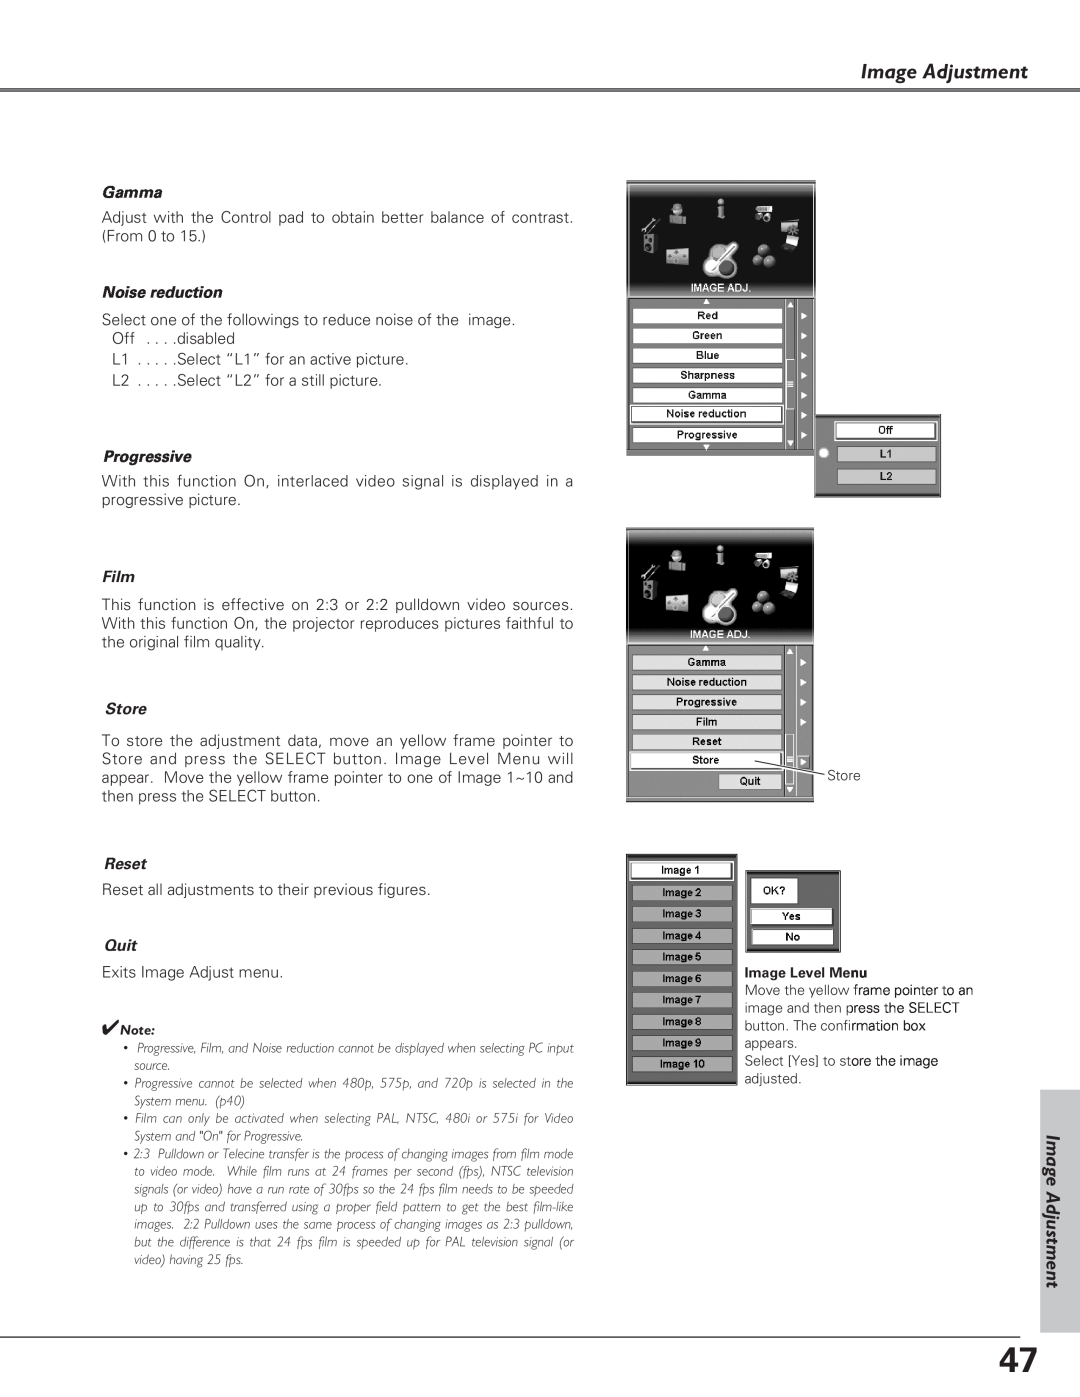 Eiki LC-SX6, LC-X6 owner manual Image Adjustment, Gamma, Noise reduction, Progressive, Film, Store, Reset, Quit 